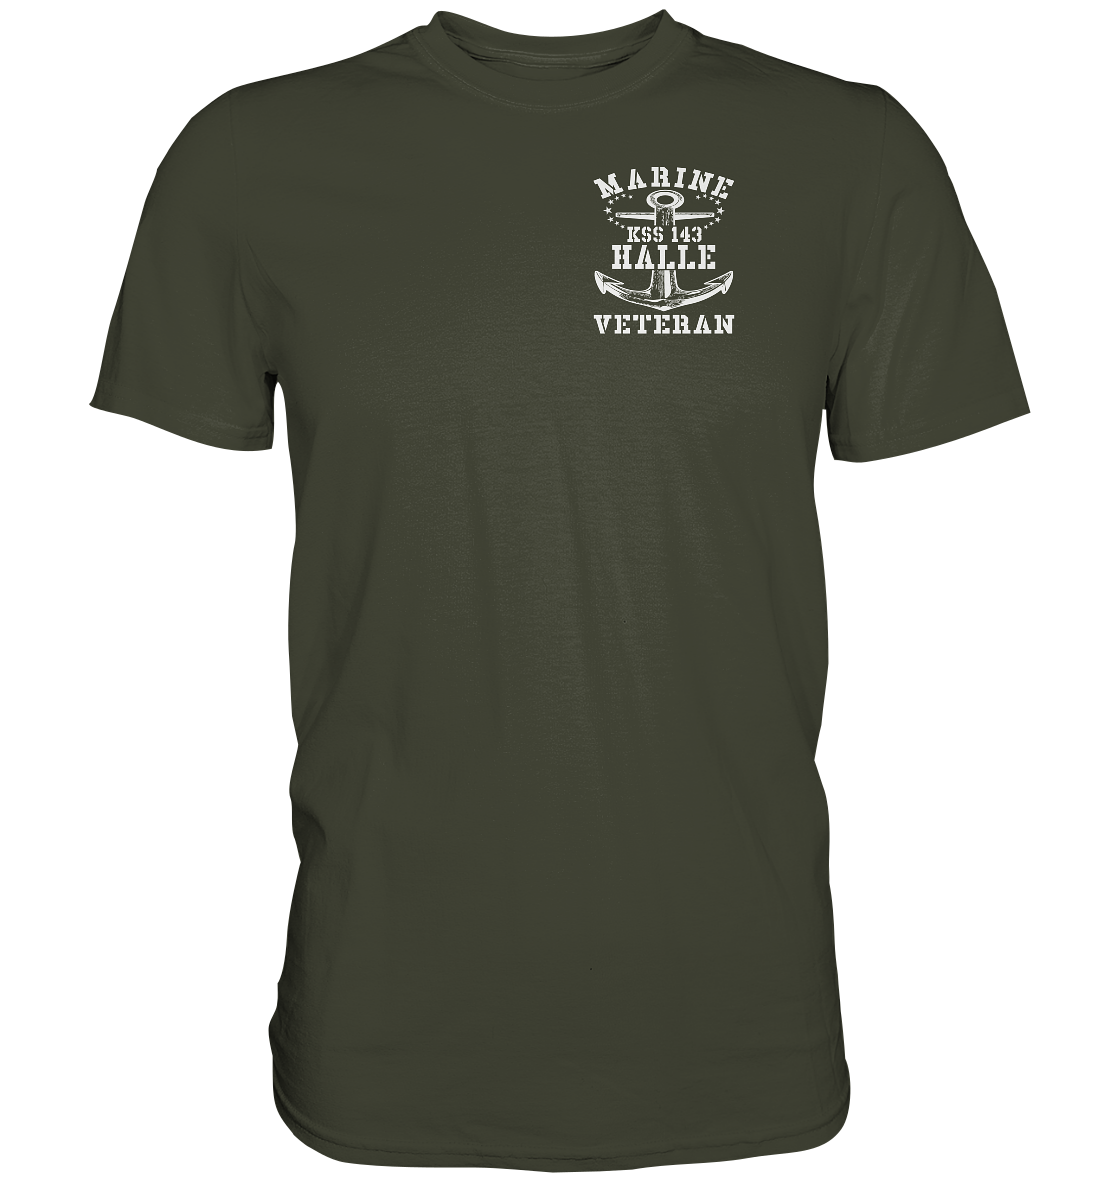 KSS 143 HALLE Marine Veteran Brustlogo - Premium Shirt